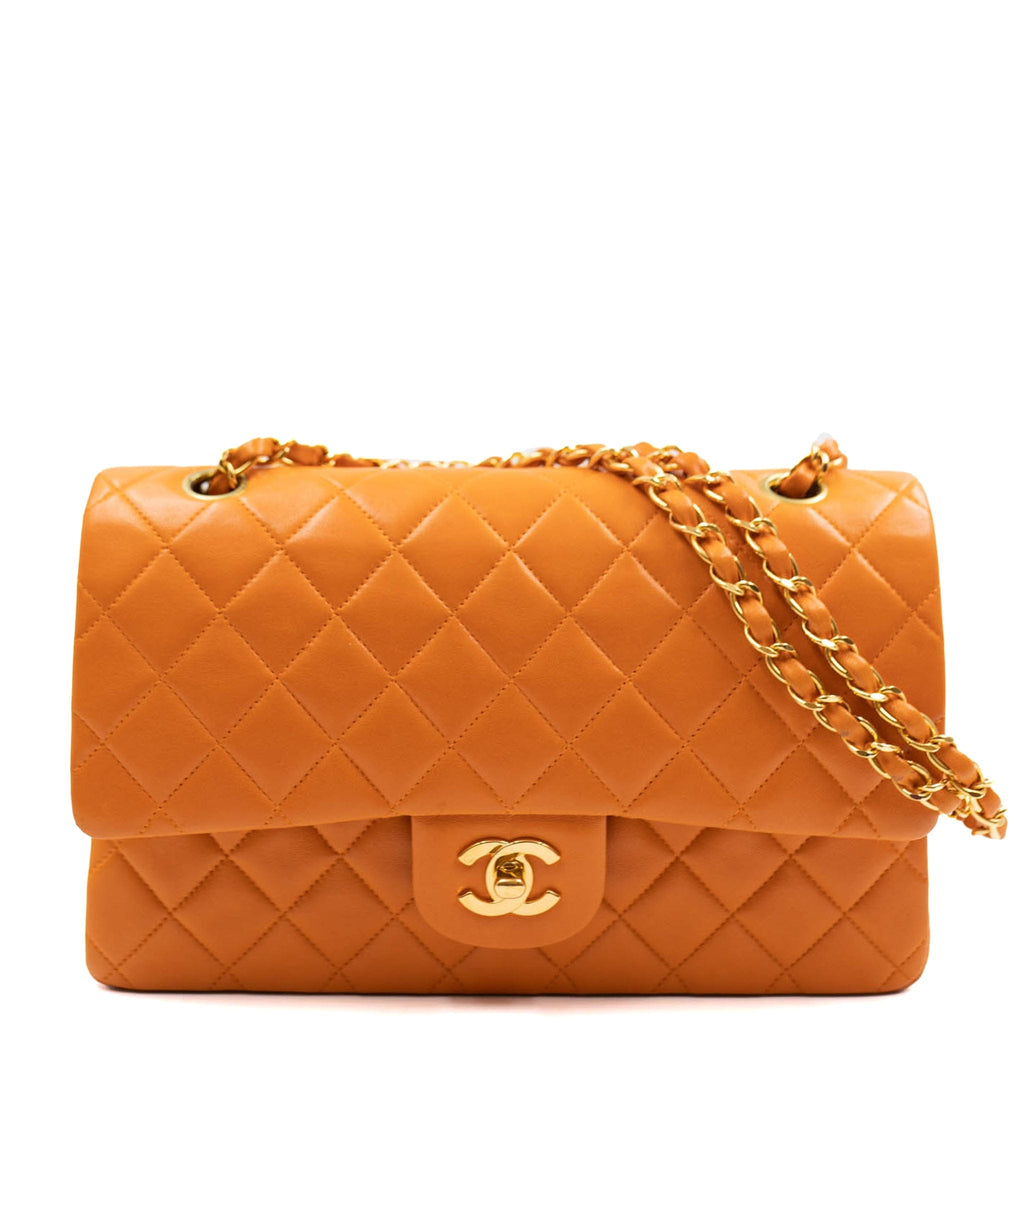 Chanel Classic Double Flap Medium Leather Shoulder Bag